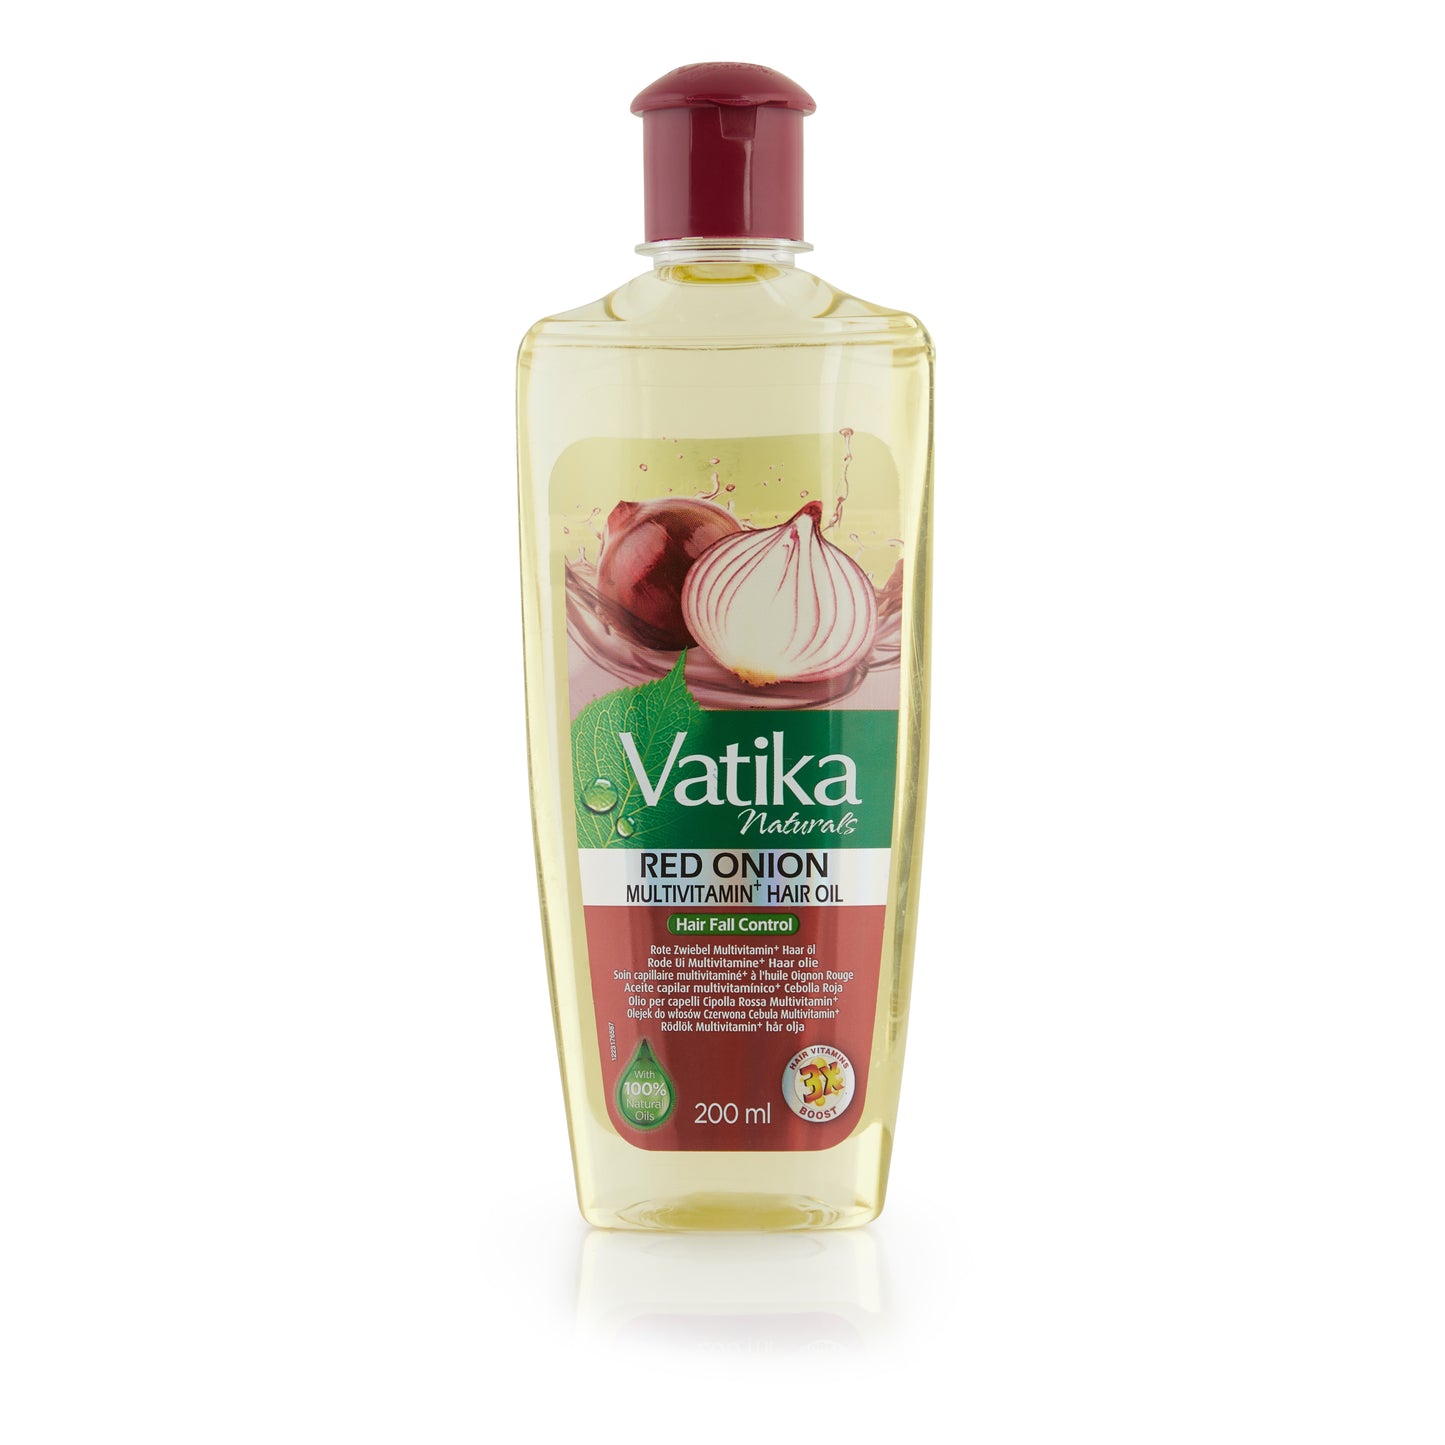 Vatika Naturals Multivitamin Enriched Red Onion Hair Oil